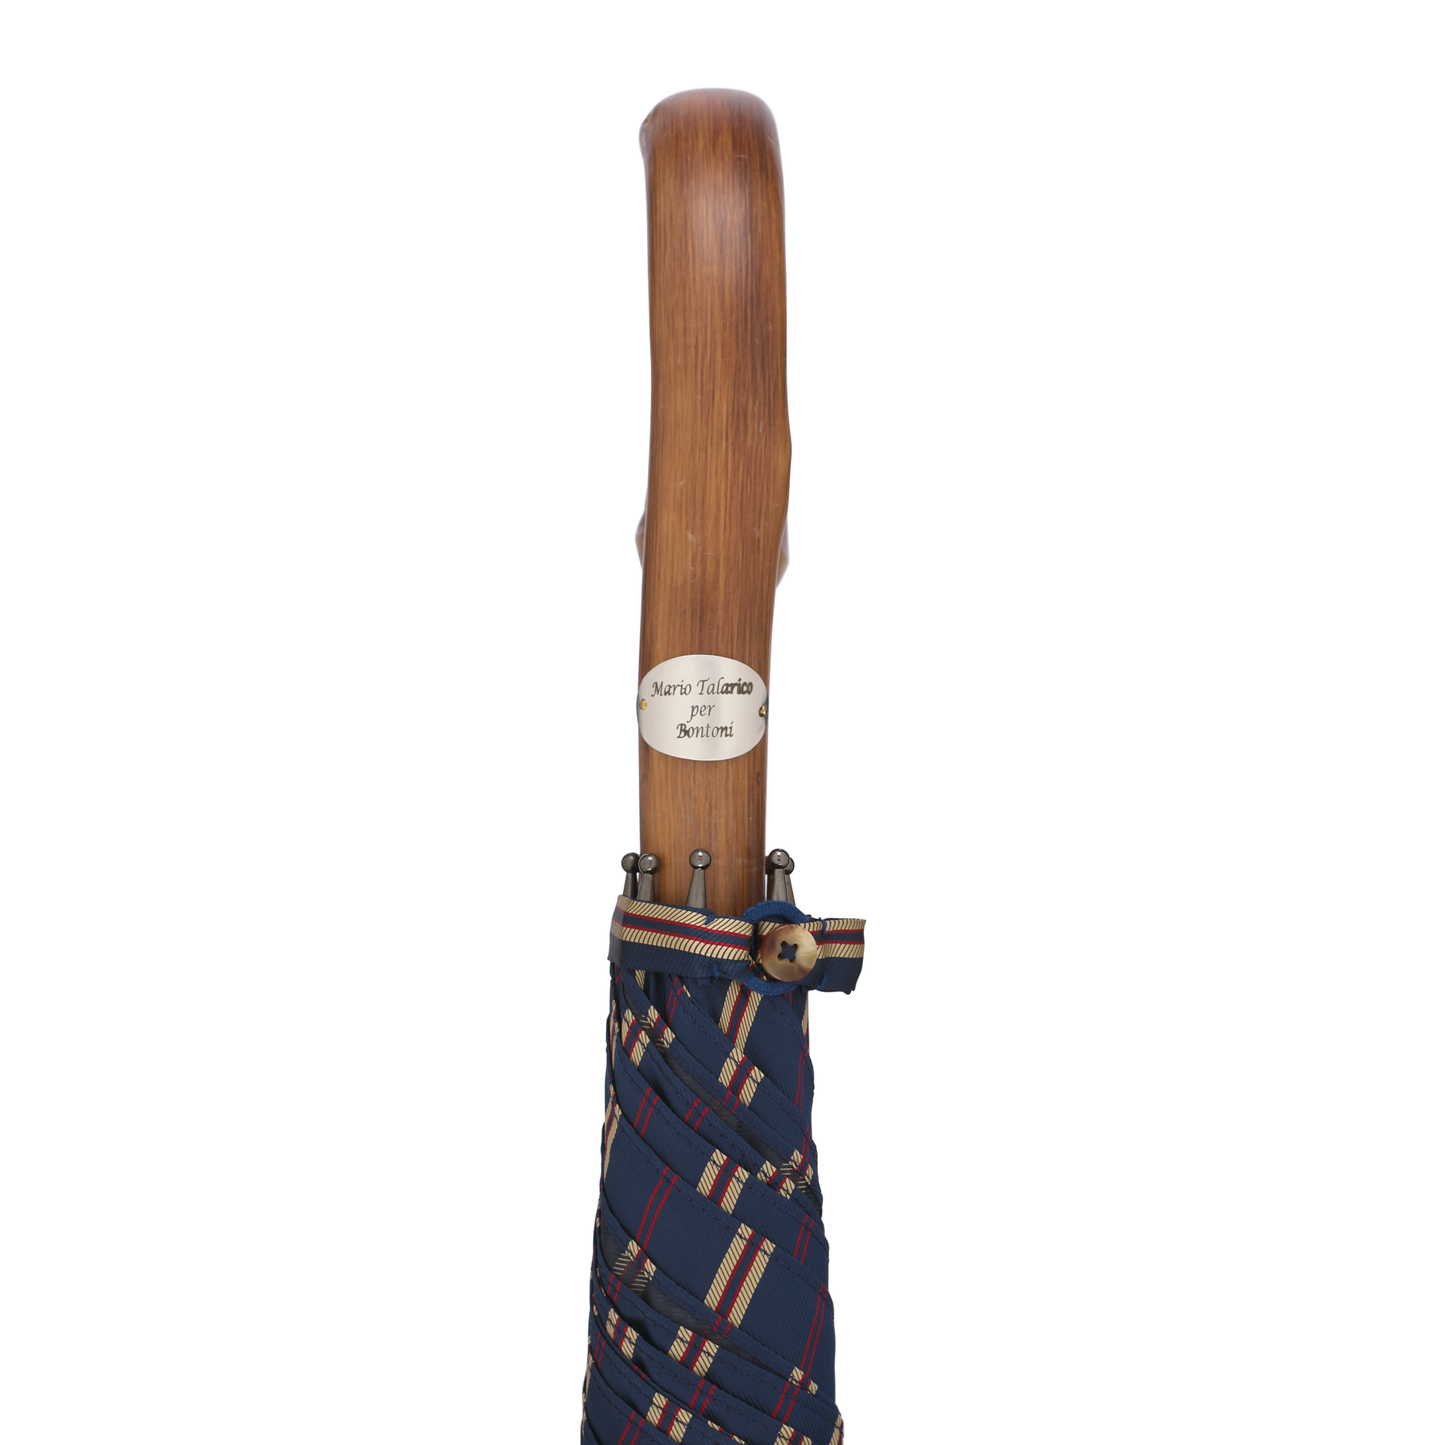 Chestnut Wood-Handle Striped Umbrella in Blue